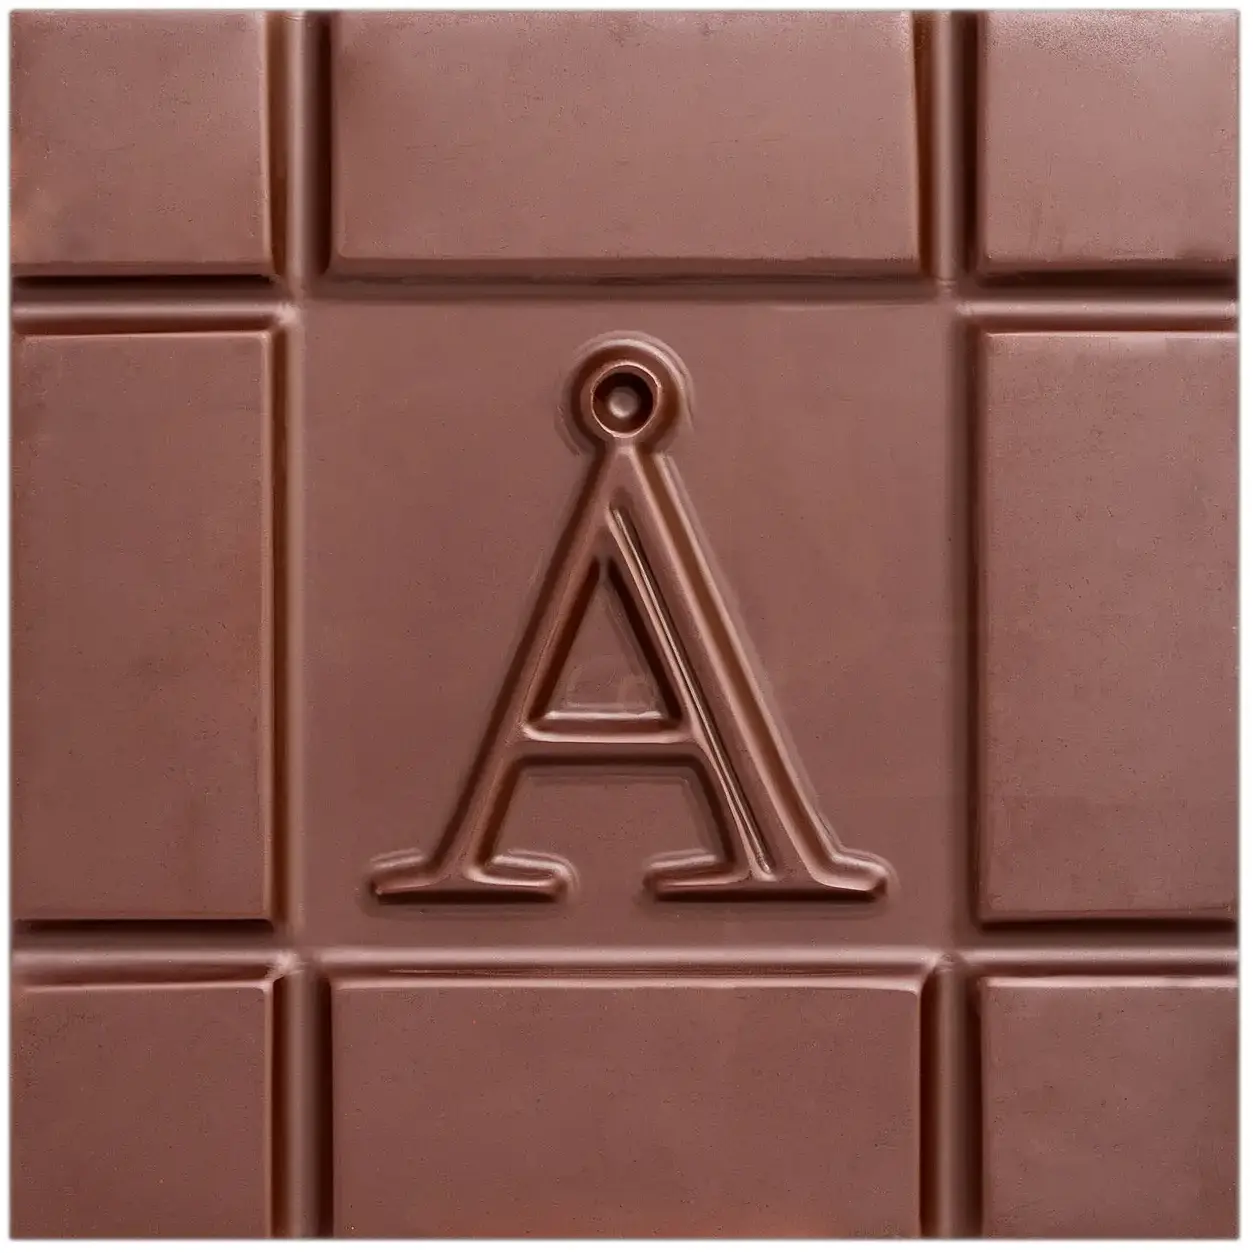 AKESSON'S | Milchschokolade »Brazil« 55% | 60g